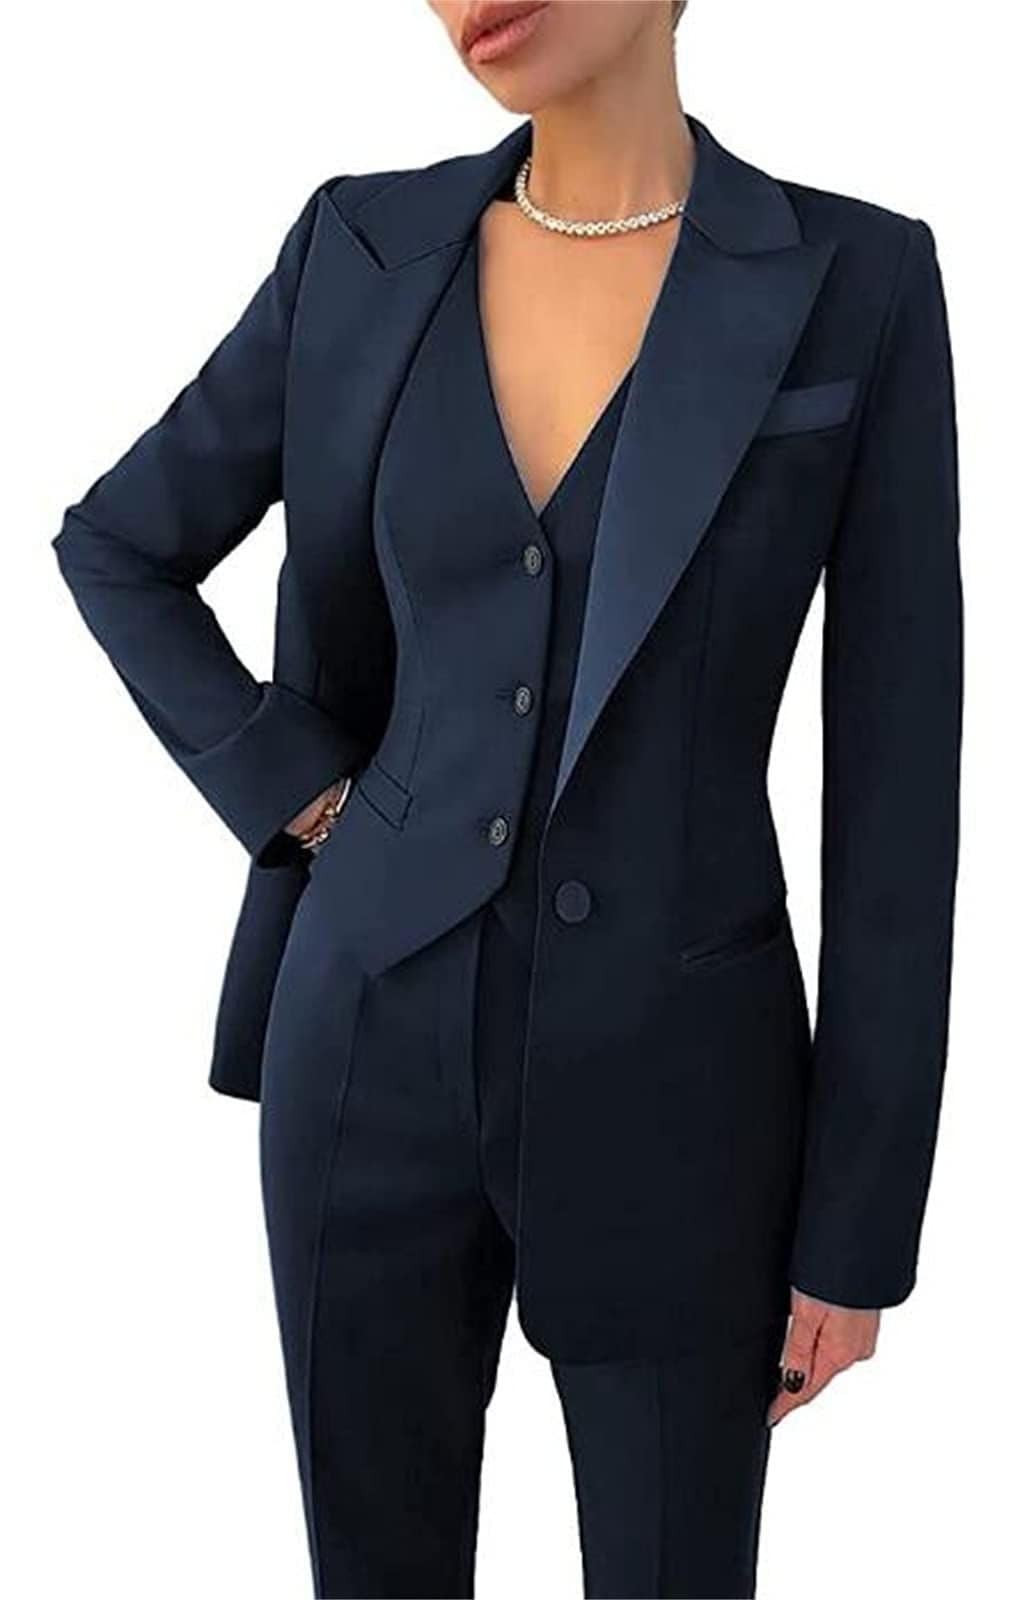 Women's Suits for sale in Delaware, Ohio